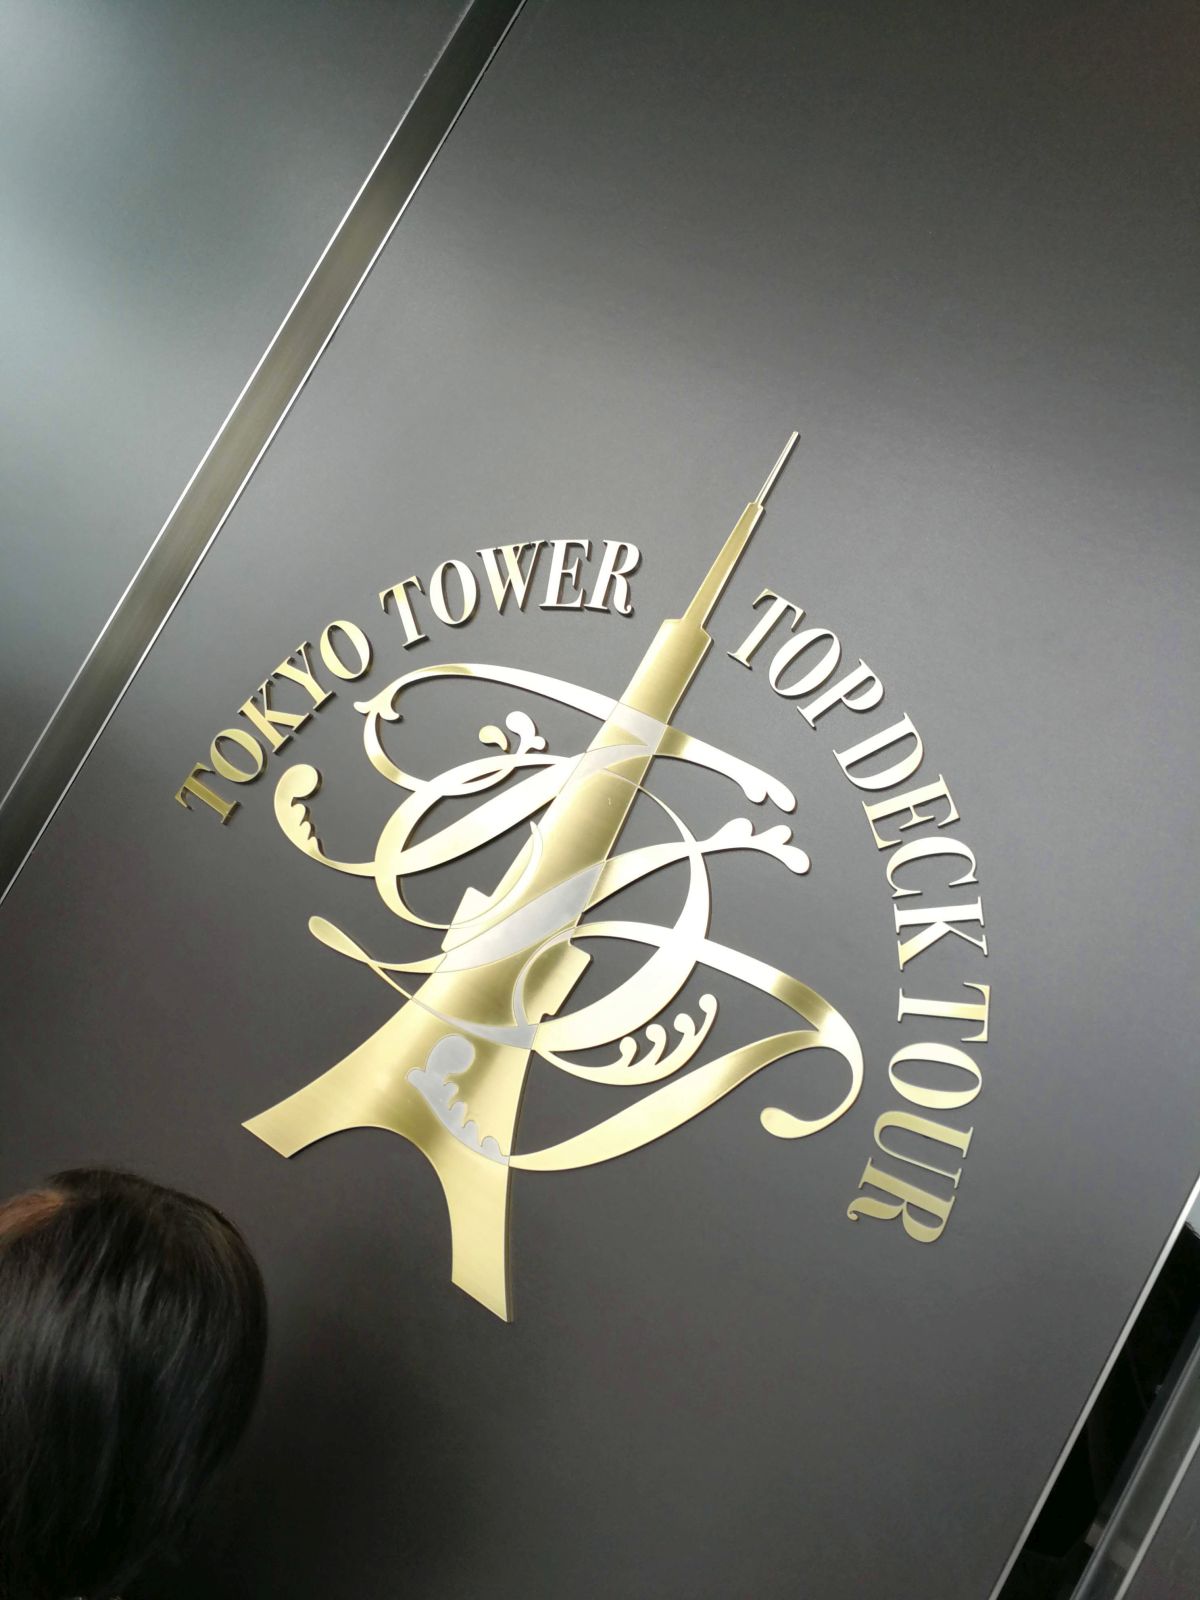 TOKYO TOWER TOP DECK TOUR